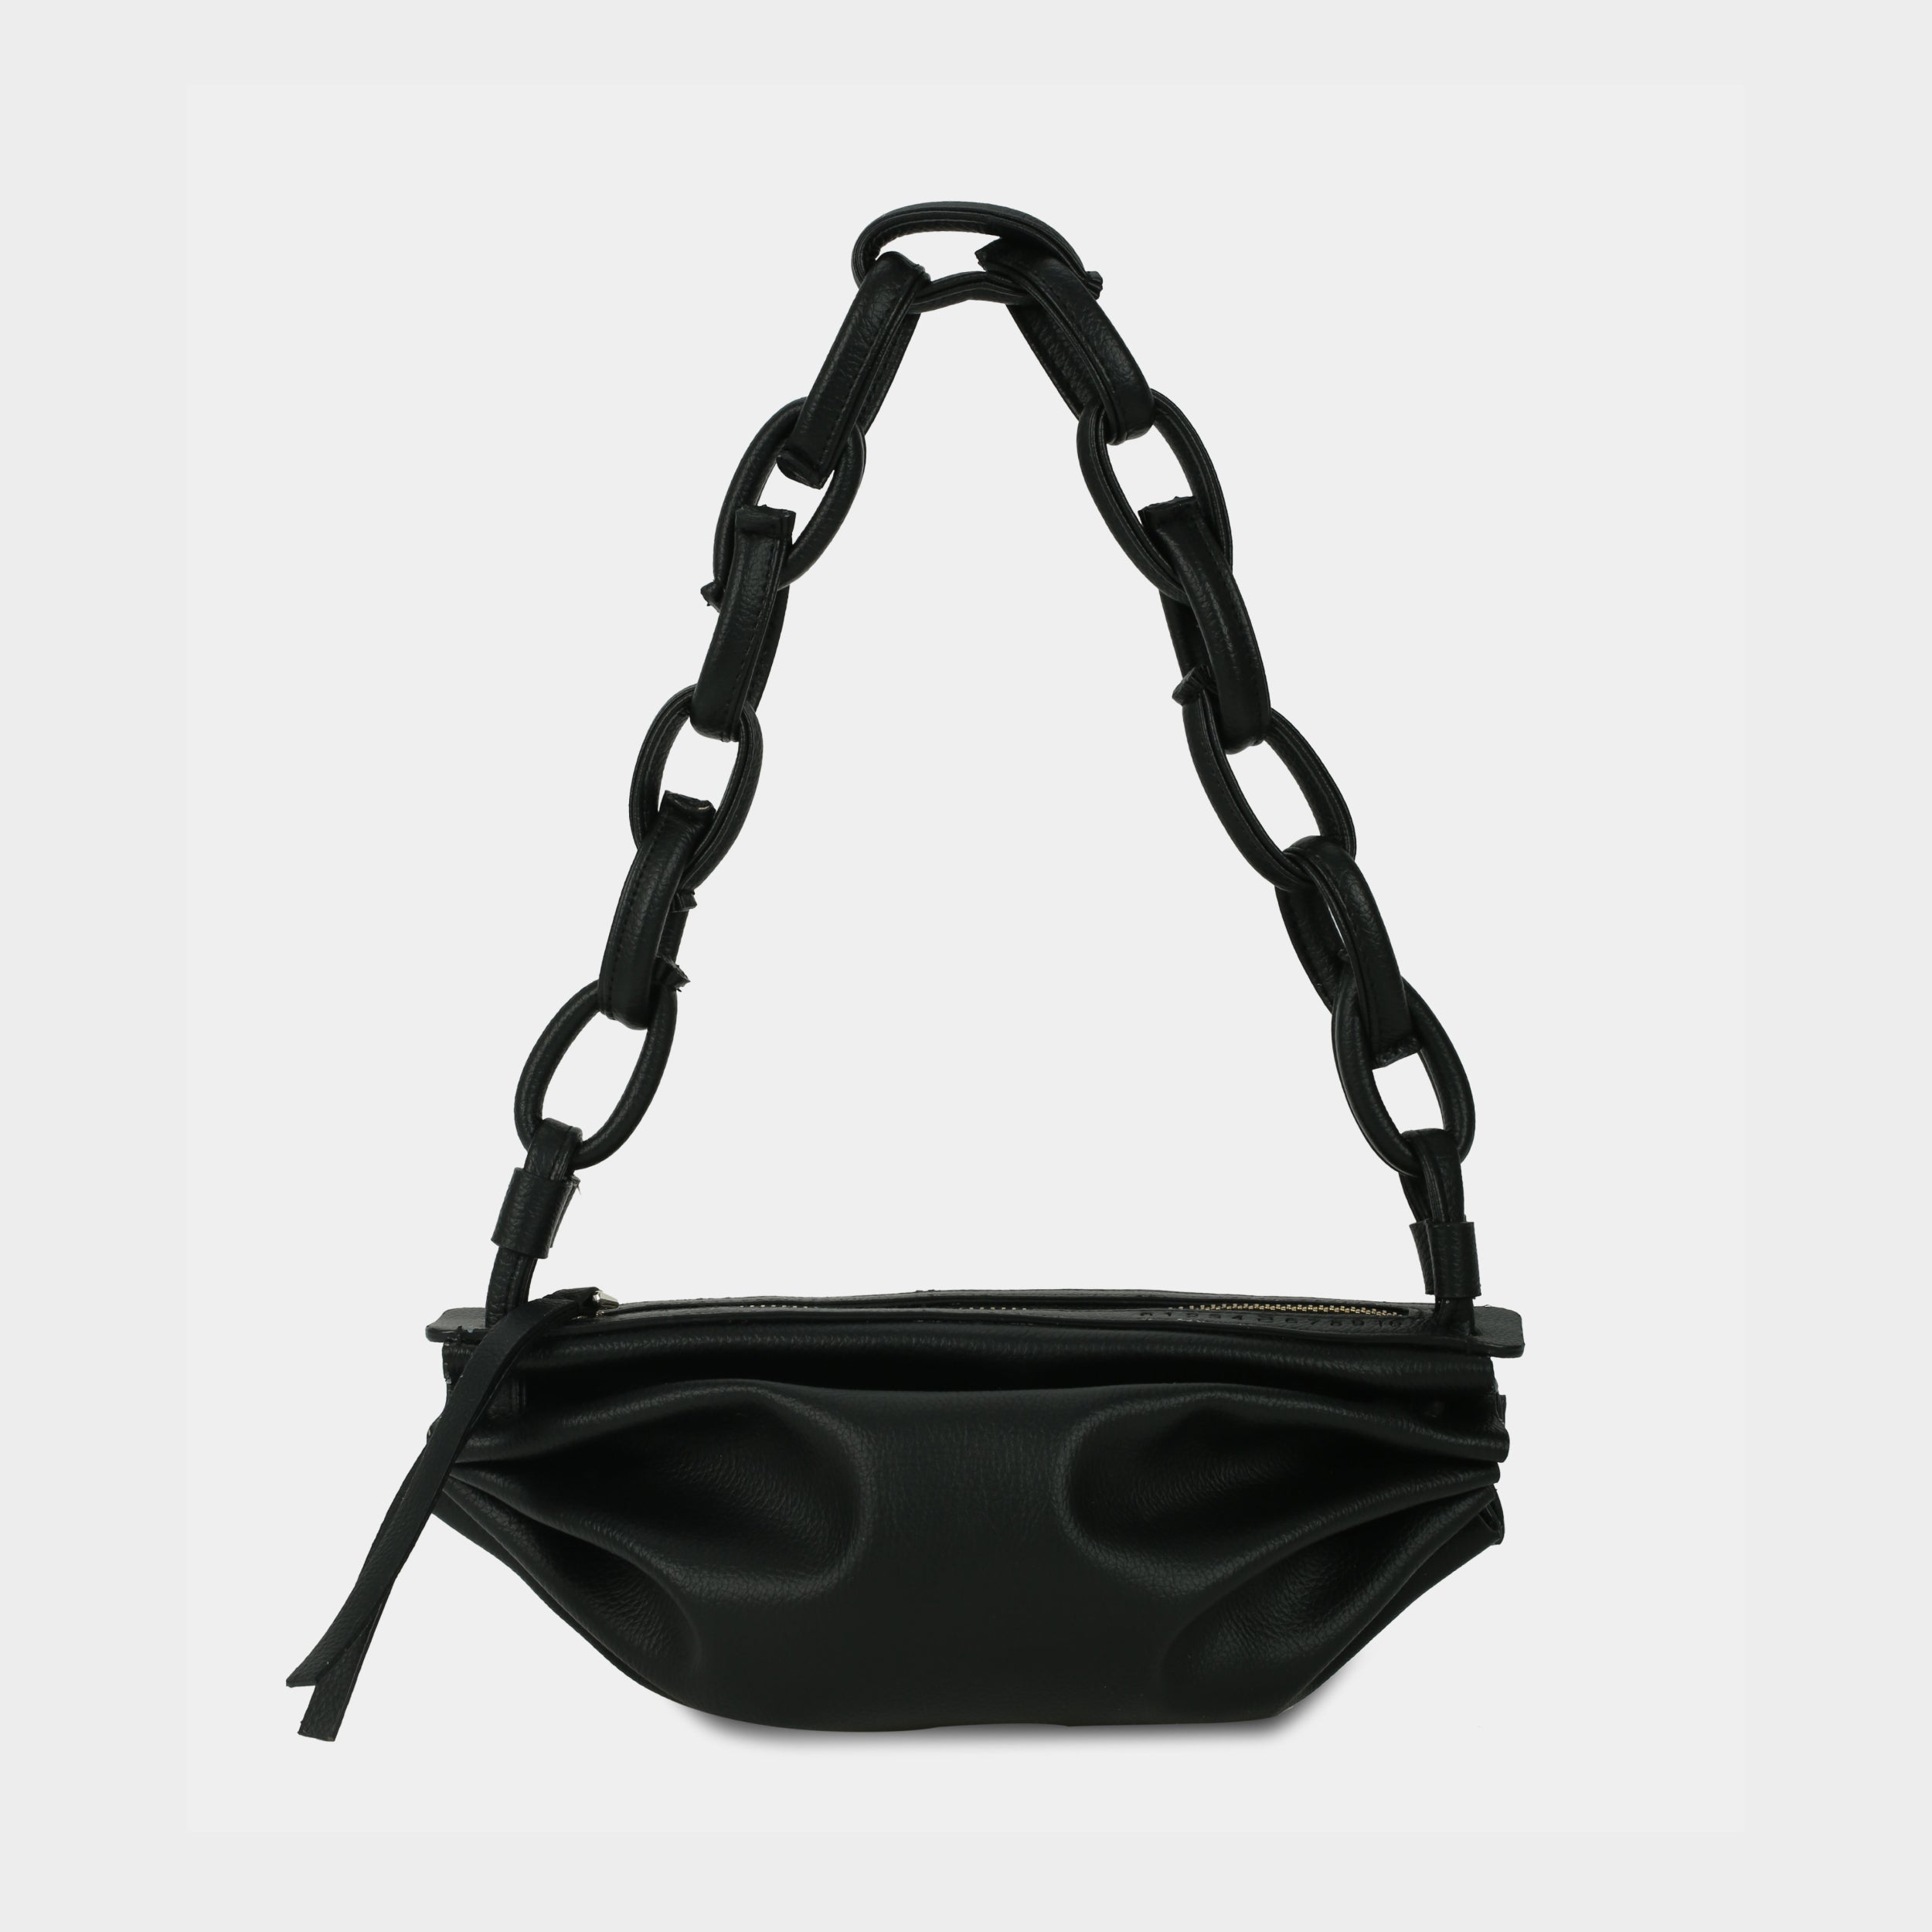 BOAT bag small size (S) black